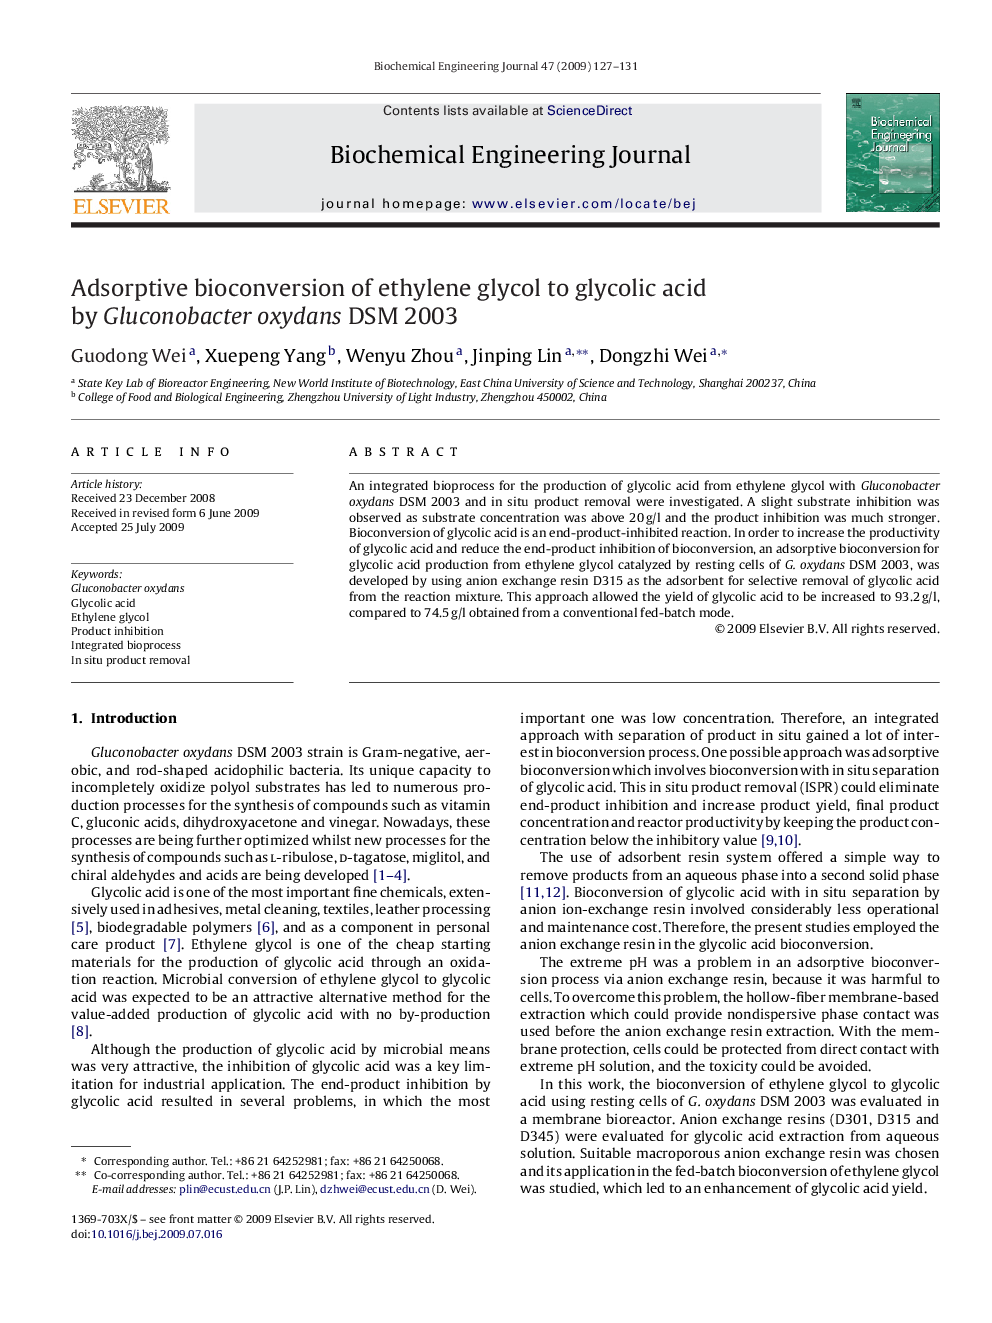 Adsorptive bioconversion of ethylene glycol to glycolic acid by Gluconobacter oxydans DSM 2003